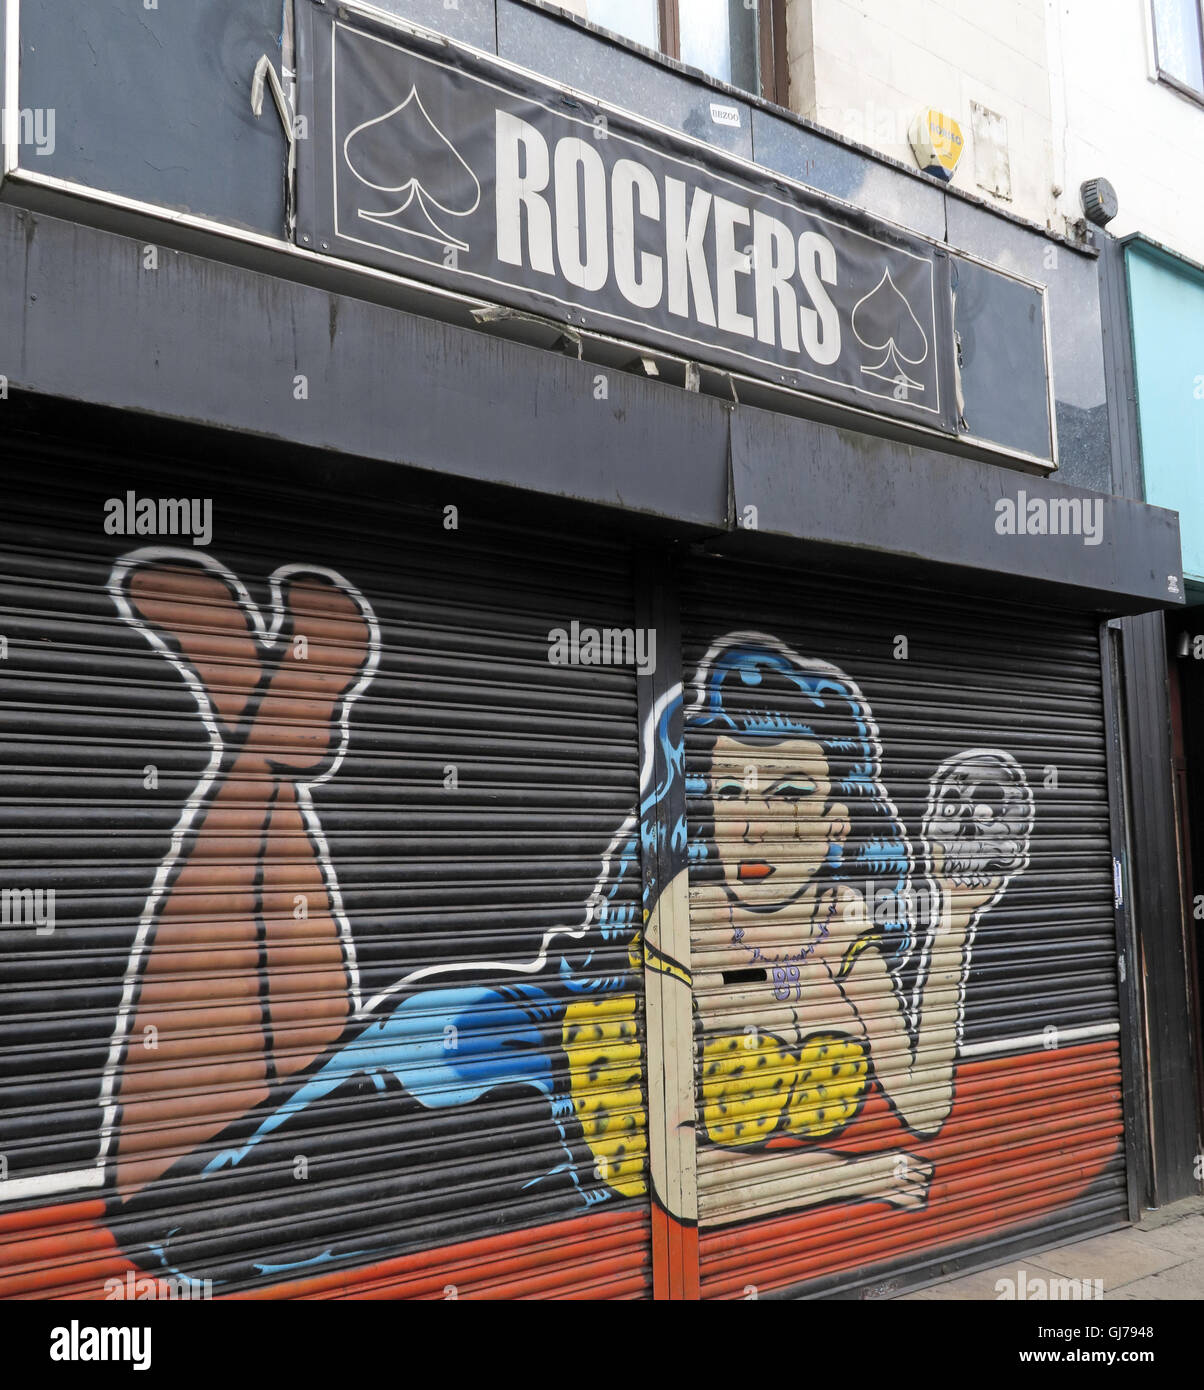 Rockers Angleterre shop volets, quart nord Art, NQ, Manchester, North West England, UK, M1 1JR Banque D'Images